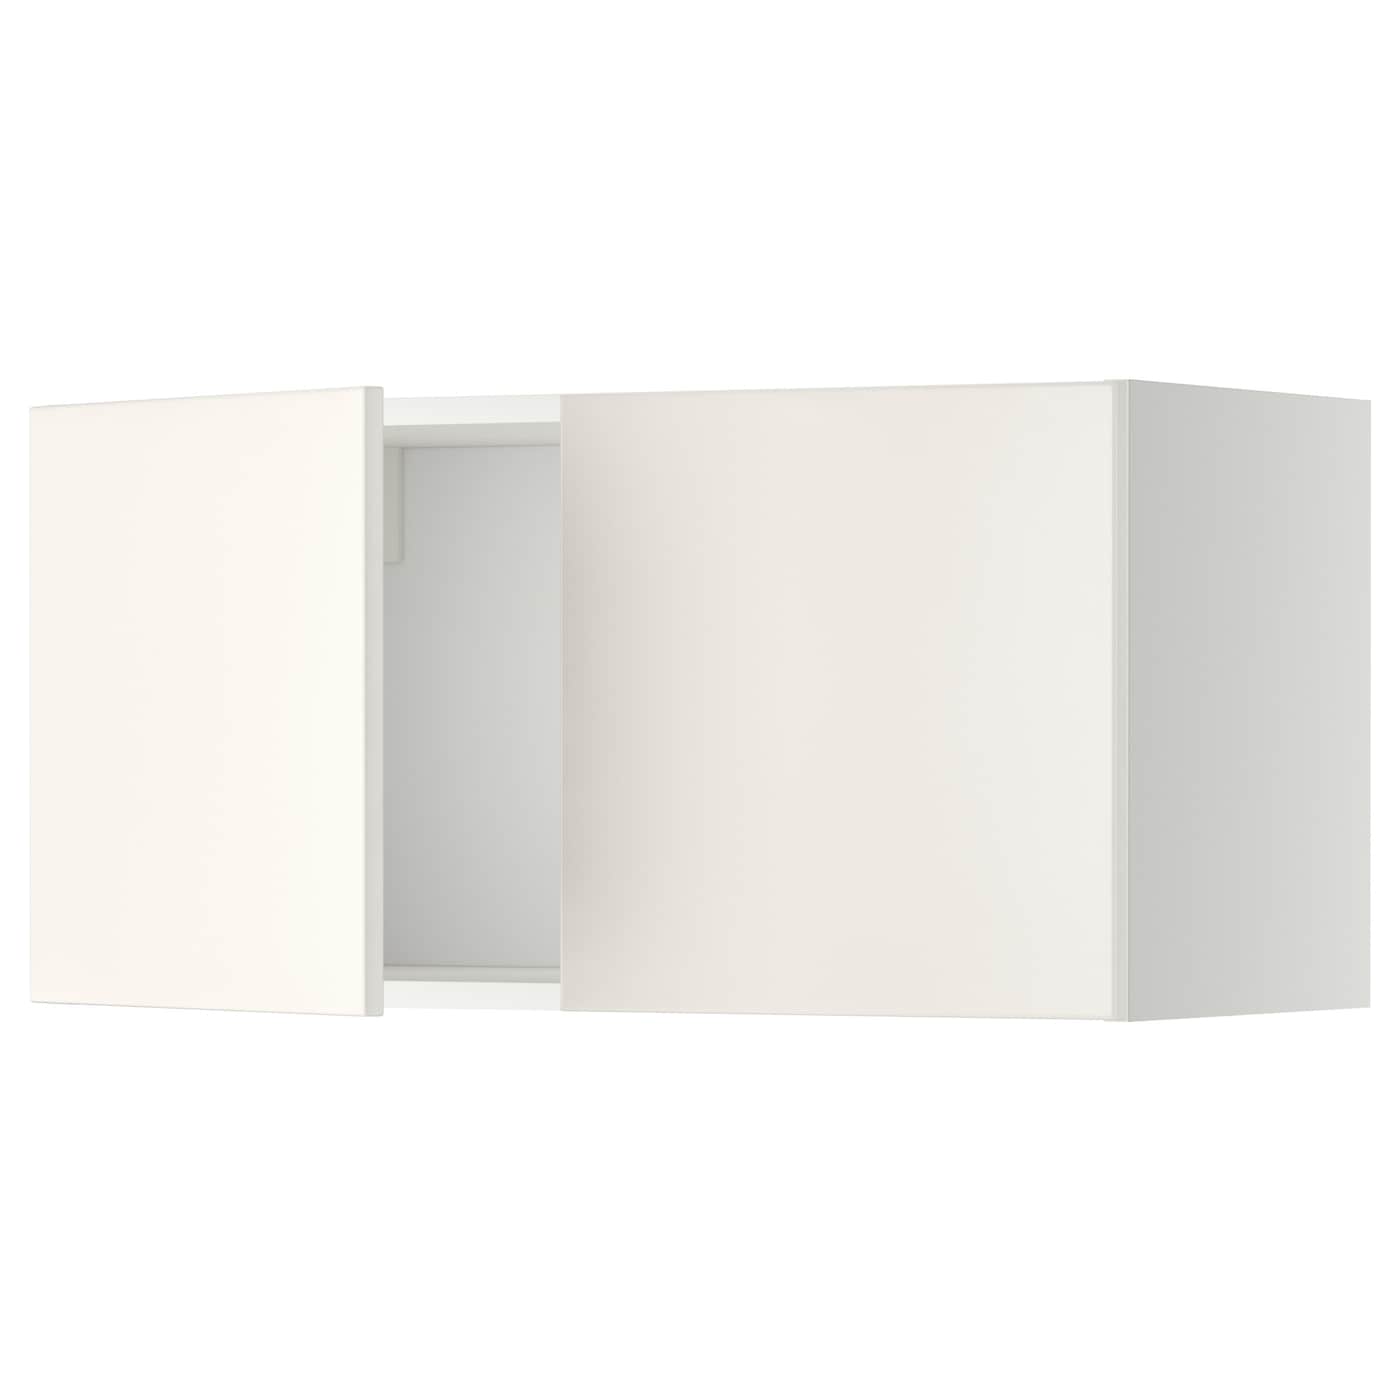 Навесной шкаф - METOD  IKEA/  МЕТОД ИКЕА, 40х80 см, белый/светло-бежевый